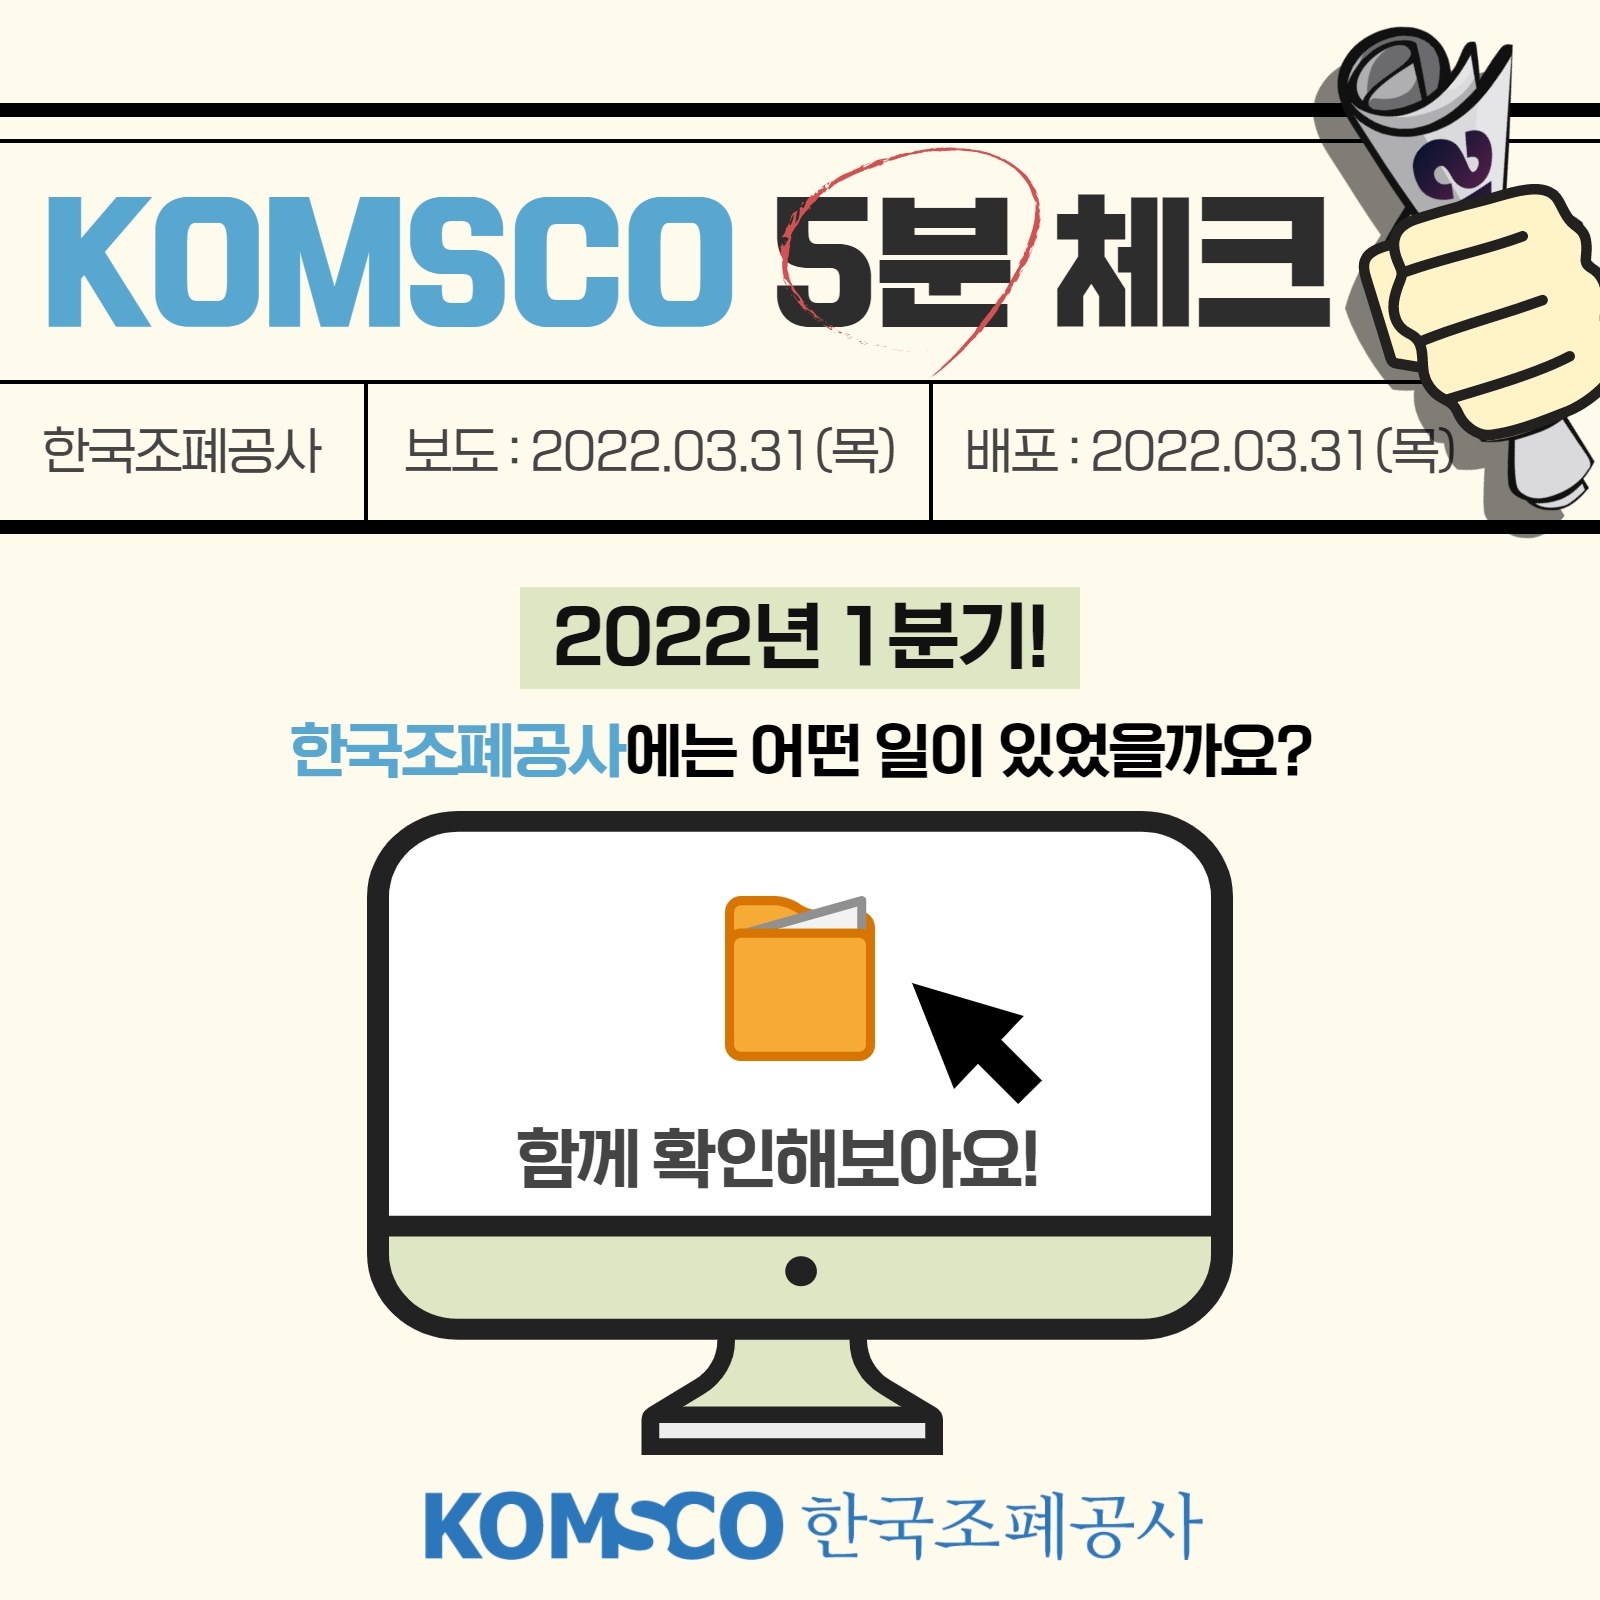  KOMSCO 5분 체크  2022년 1분기! 한국조폐공사에는 어떤 일이 있었을까요~? 함께 확인해보아요!  